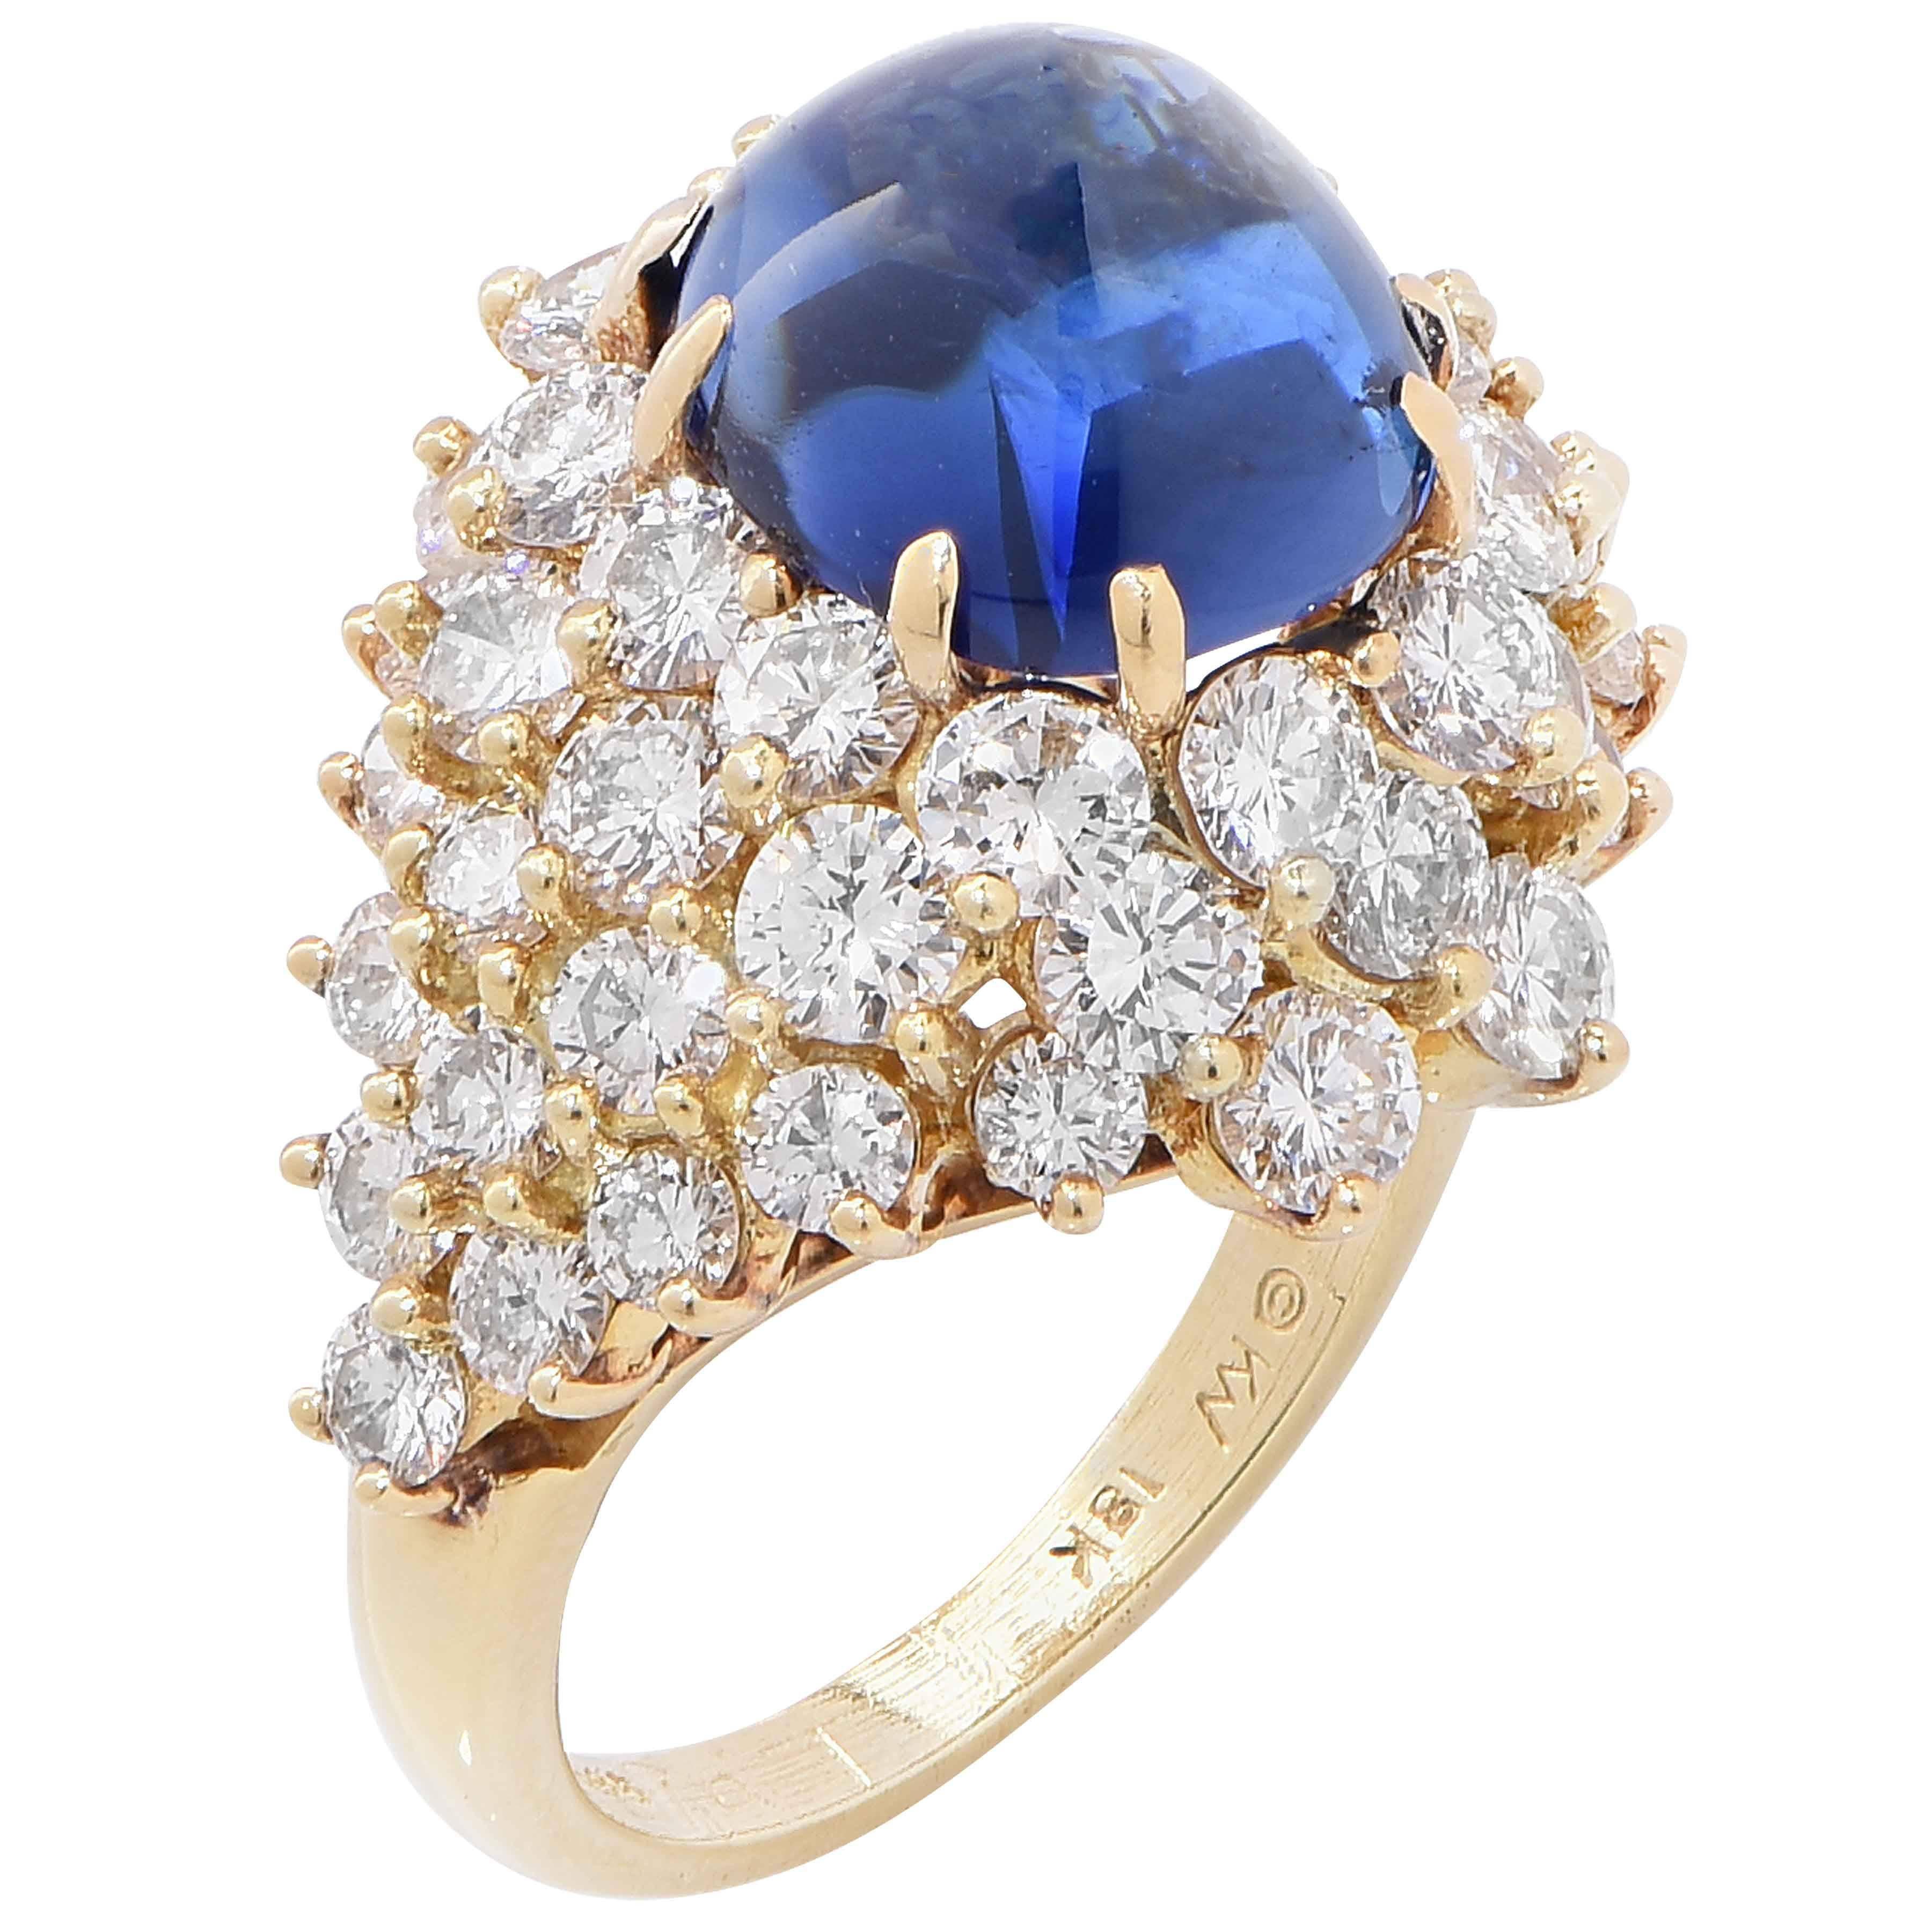 Kurt Wayne Approximately 9.8 Carat Natural Cabochon Sapphire Diamond Gold Ring